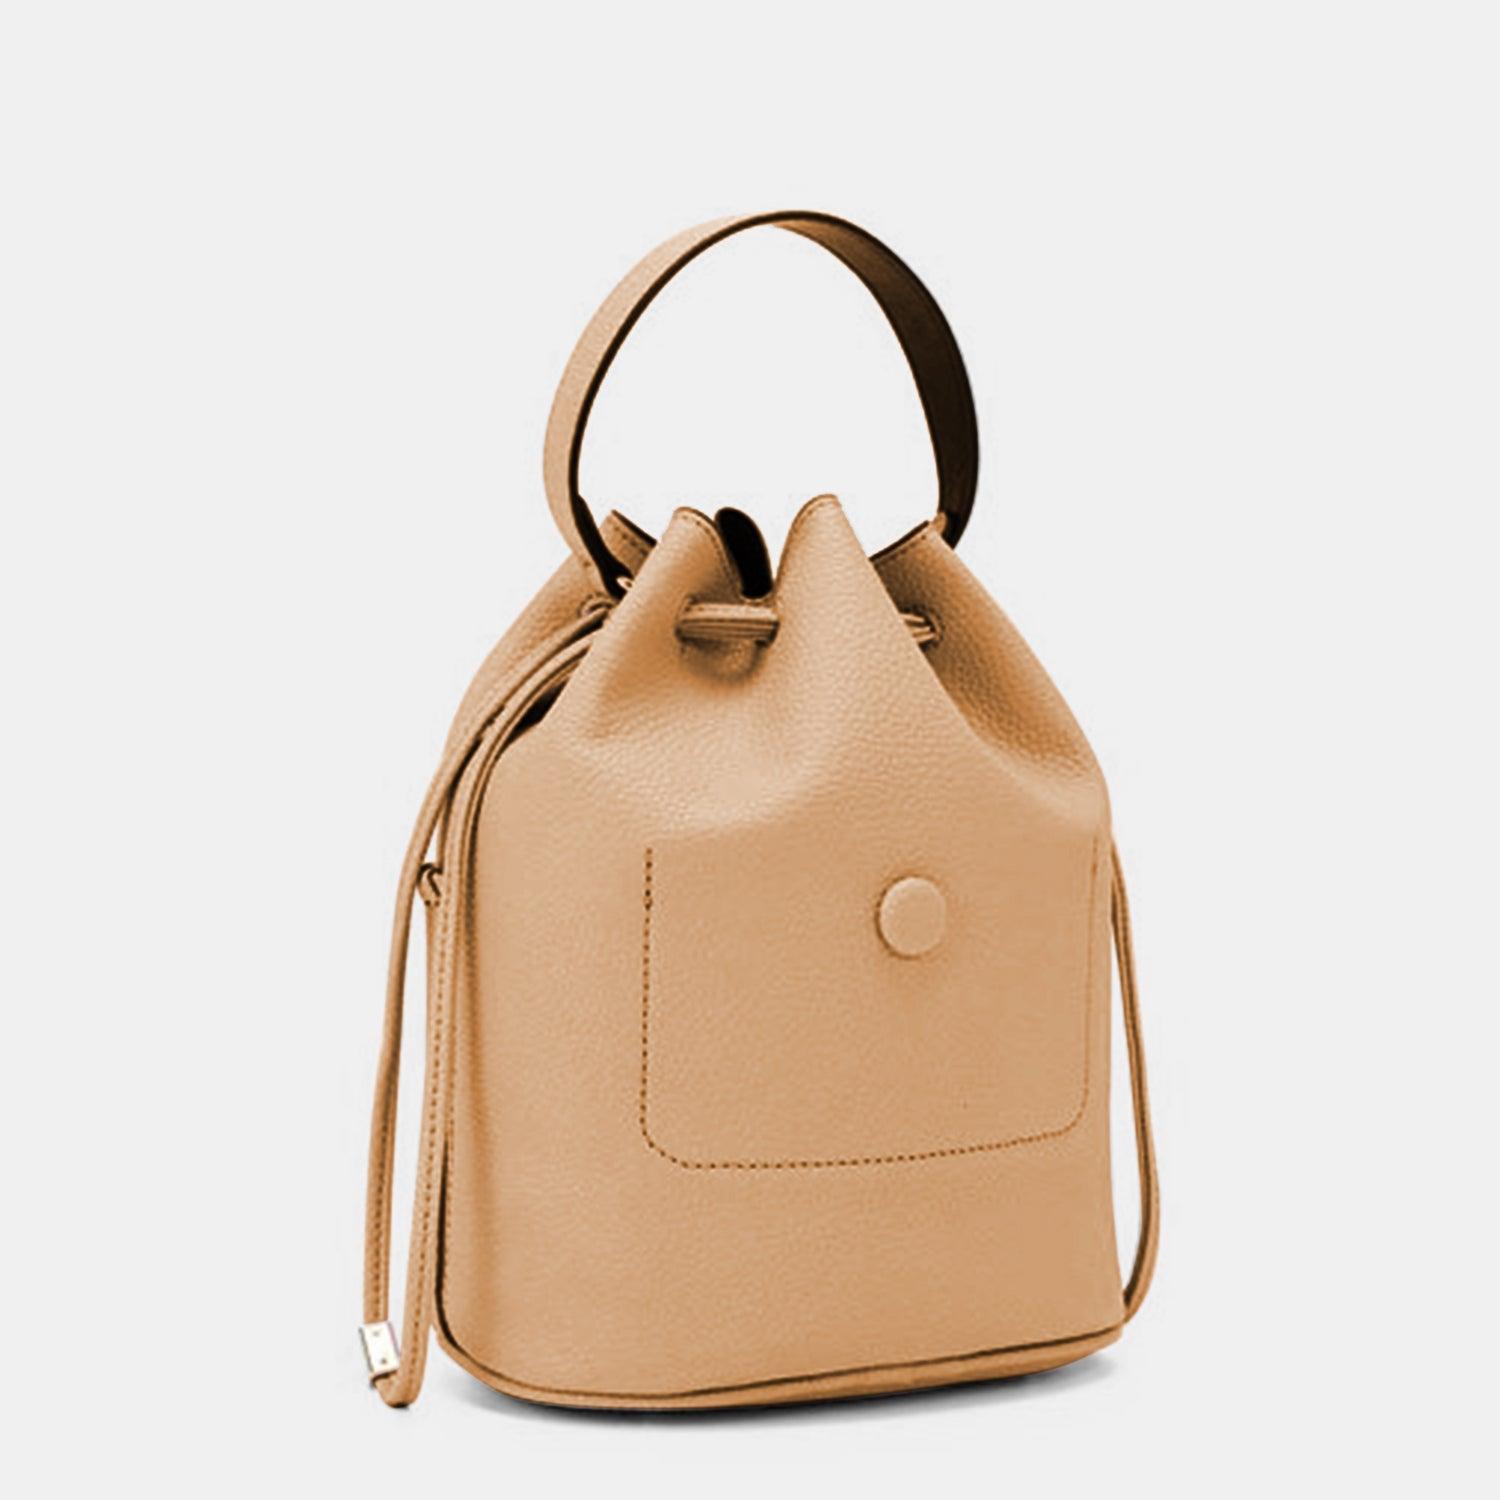 a tan leather handbag on a white background